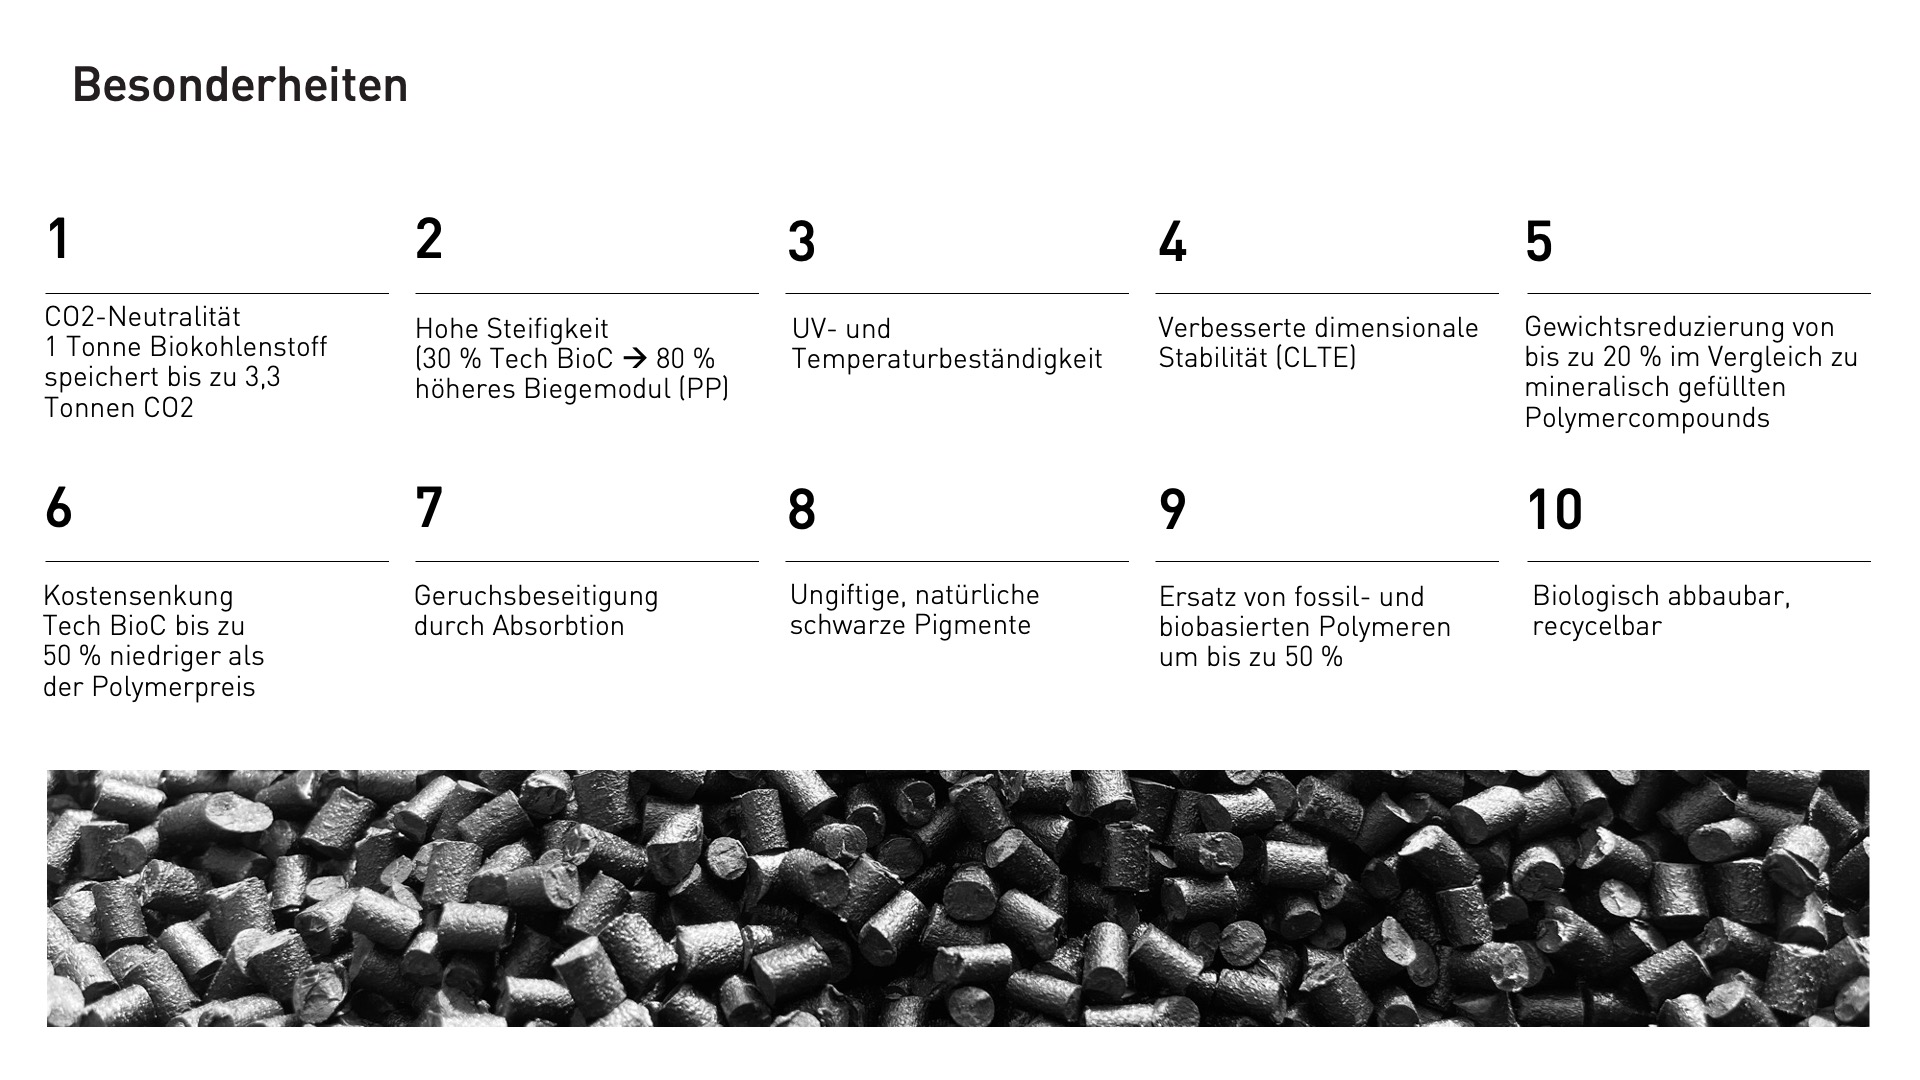 Properties of CO2-negative plastic pellets